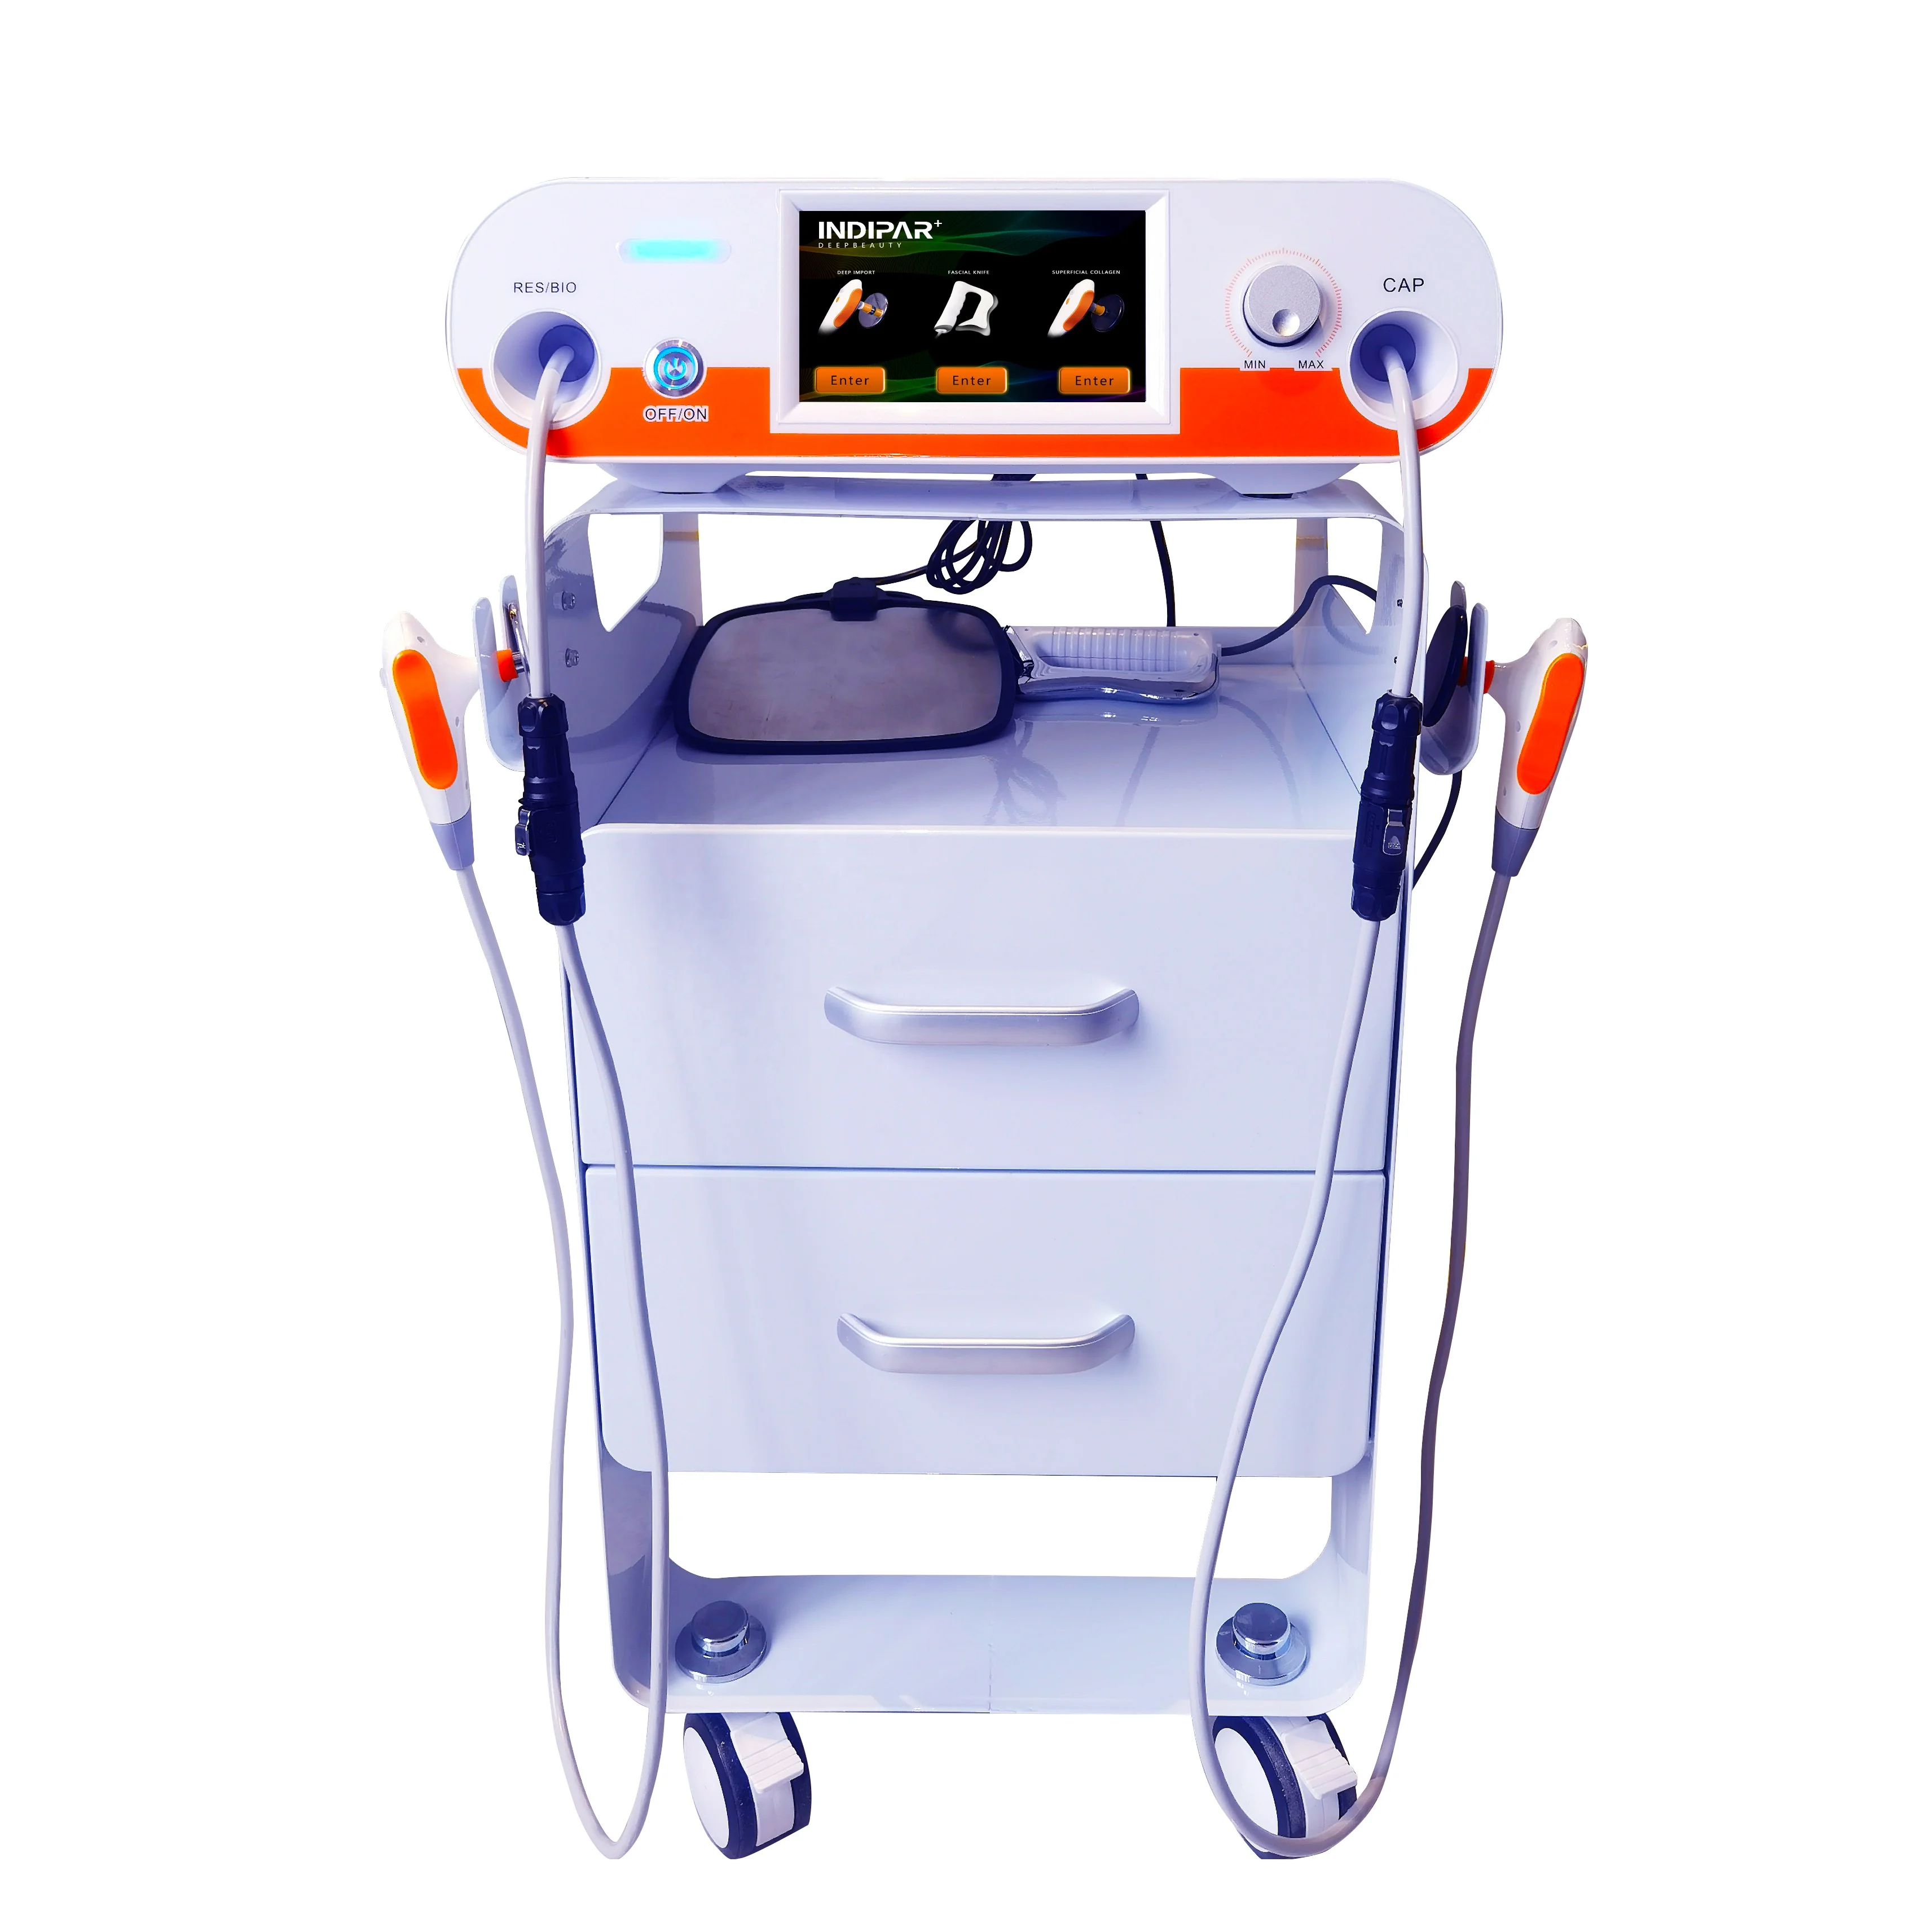 

VE R106 portable indiba 448khz ret cet rf indiba short wave diathermy tecar therapy physio machine, Orange